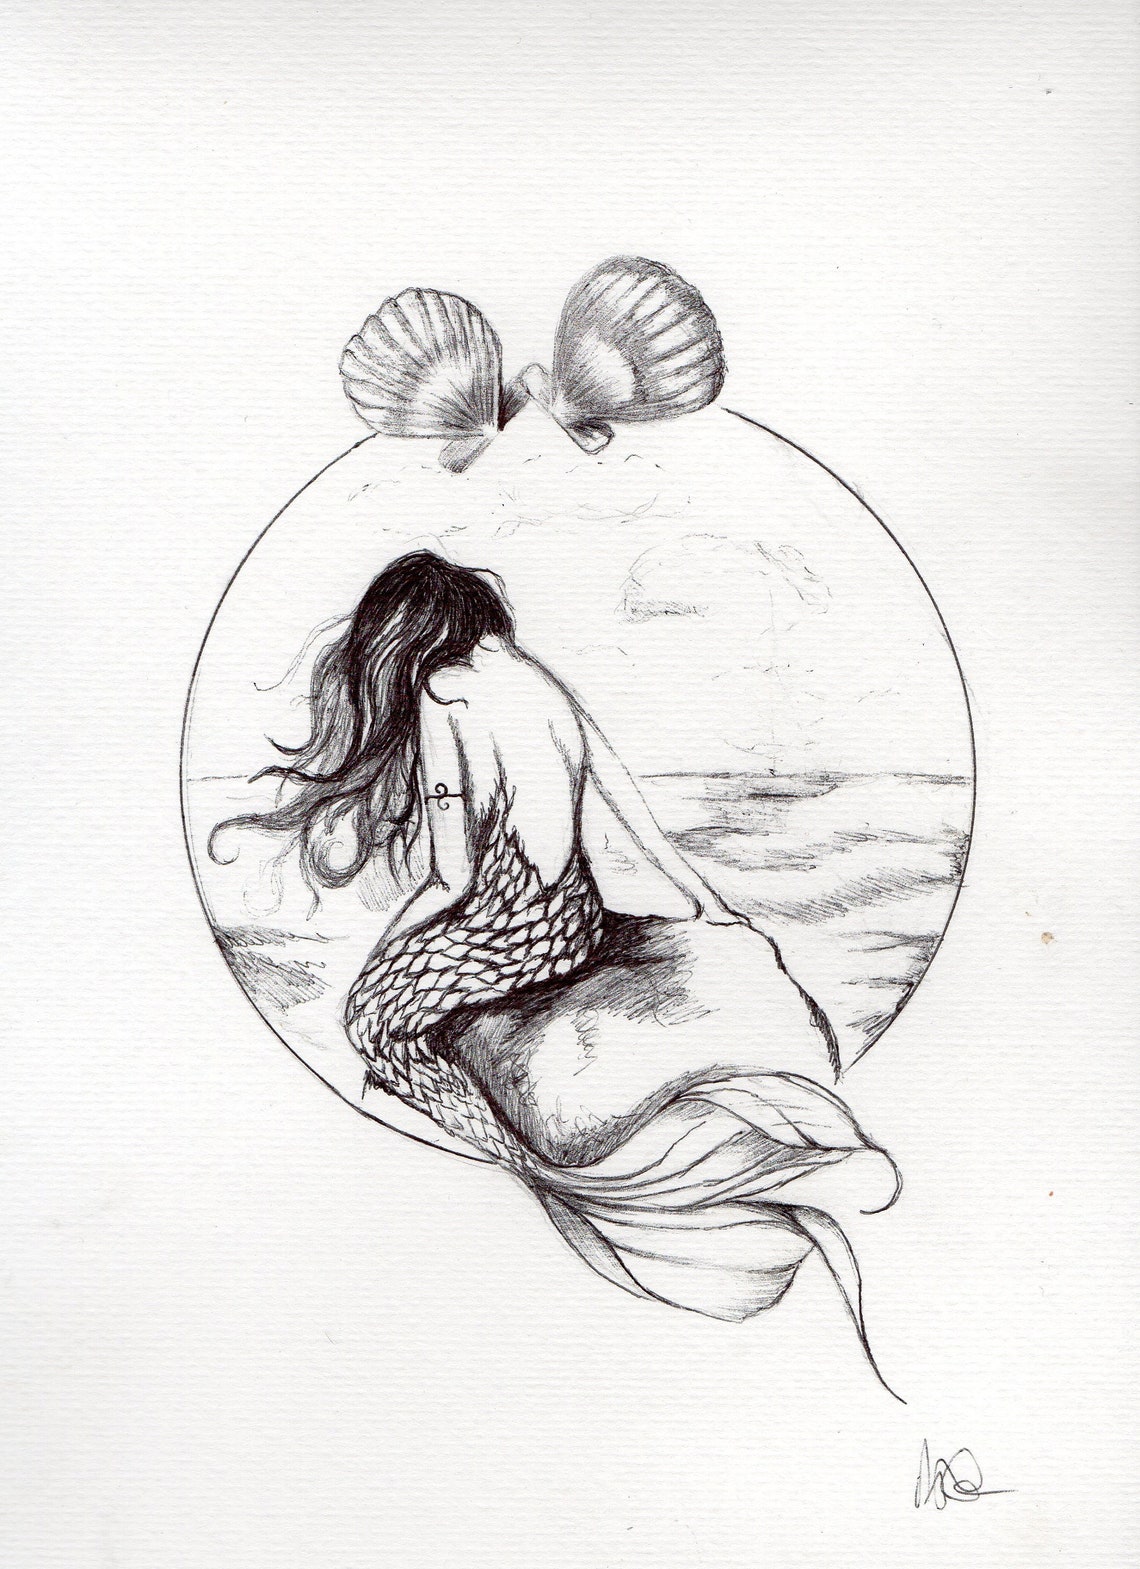 Mermaid pen drawing tattoo design | Etsy